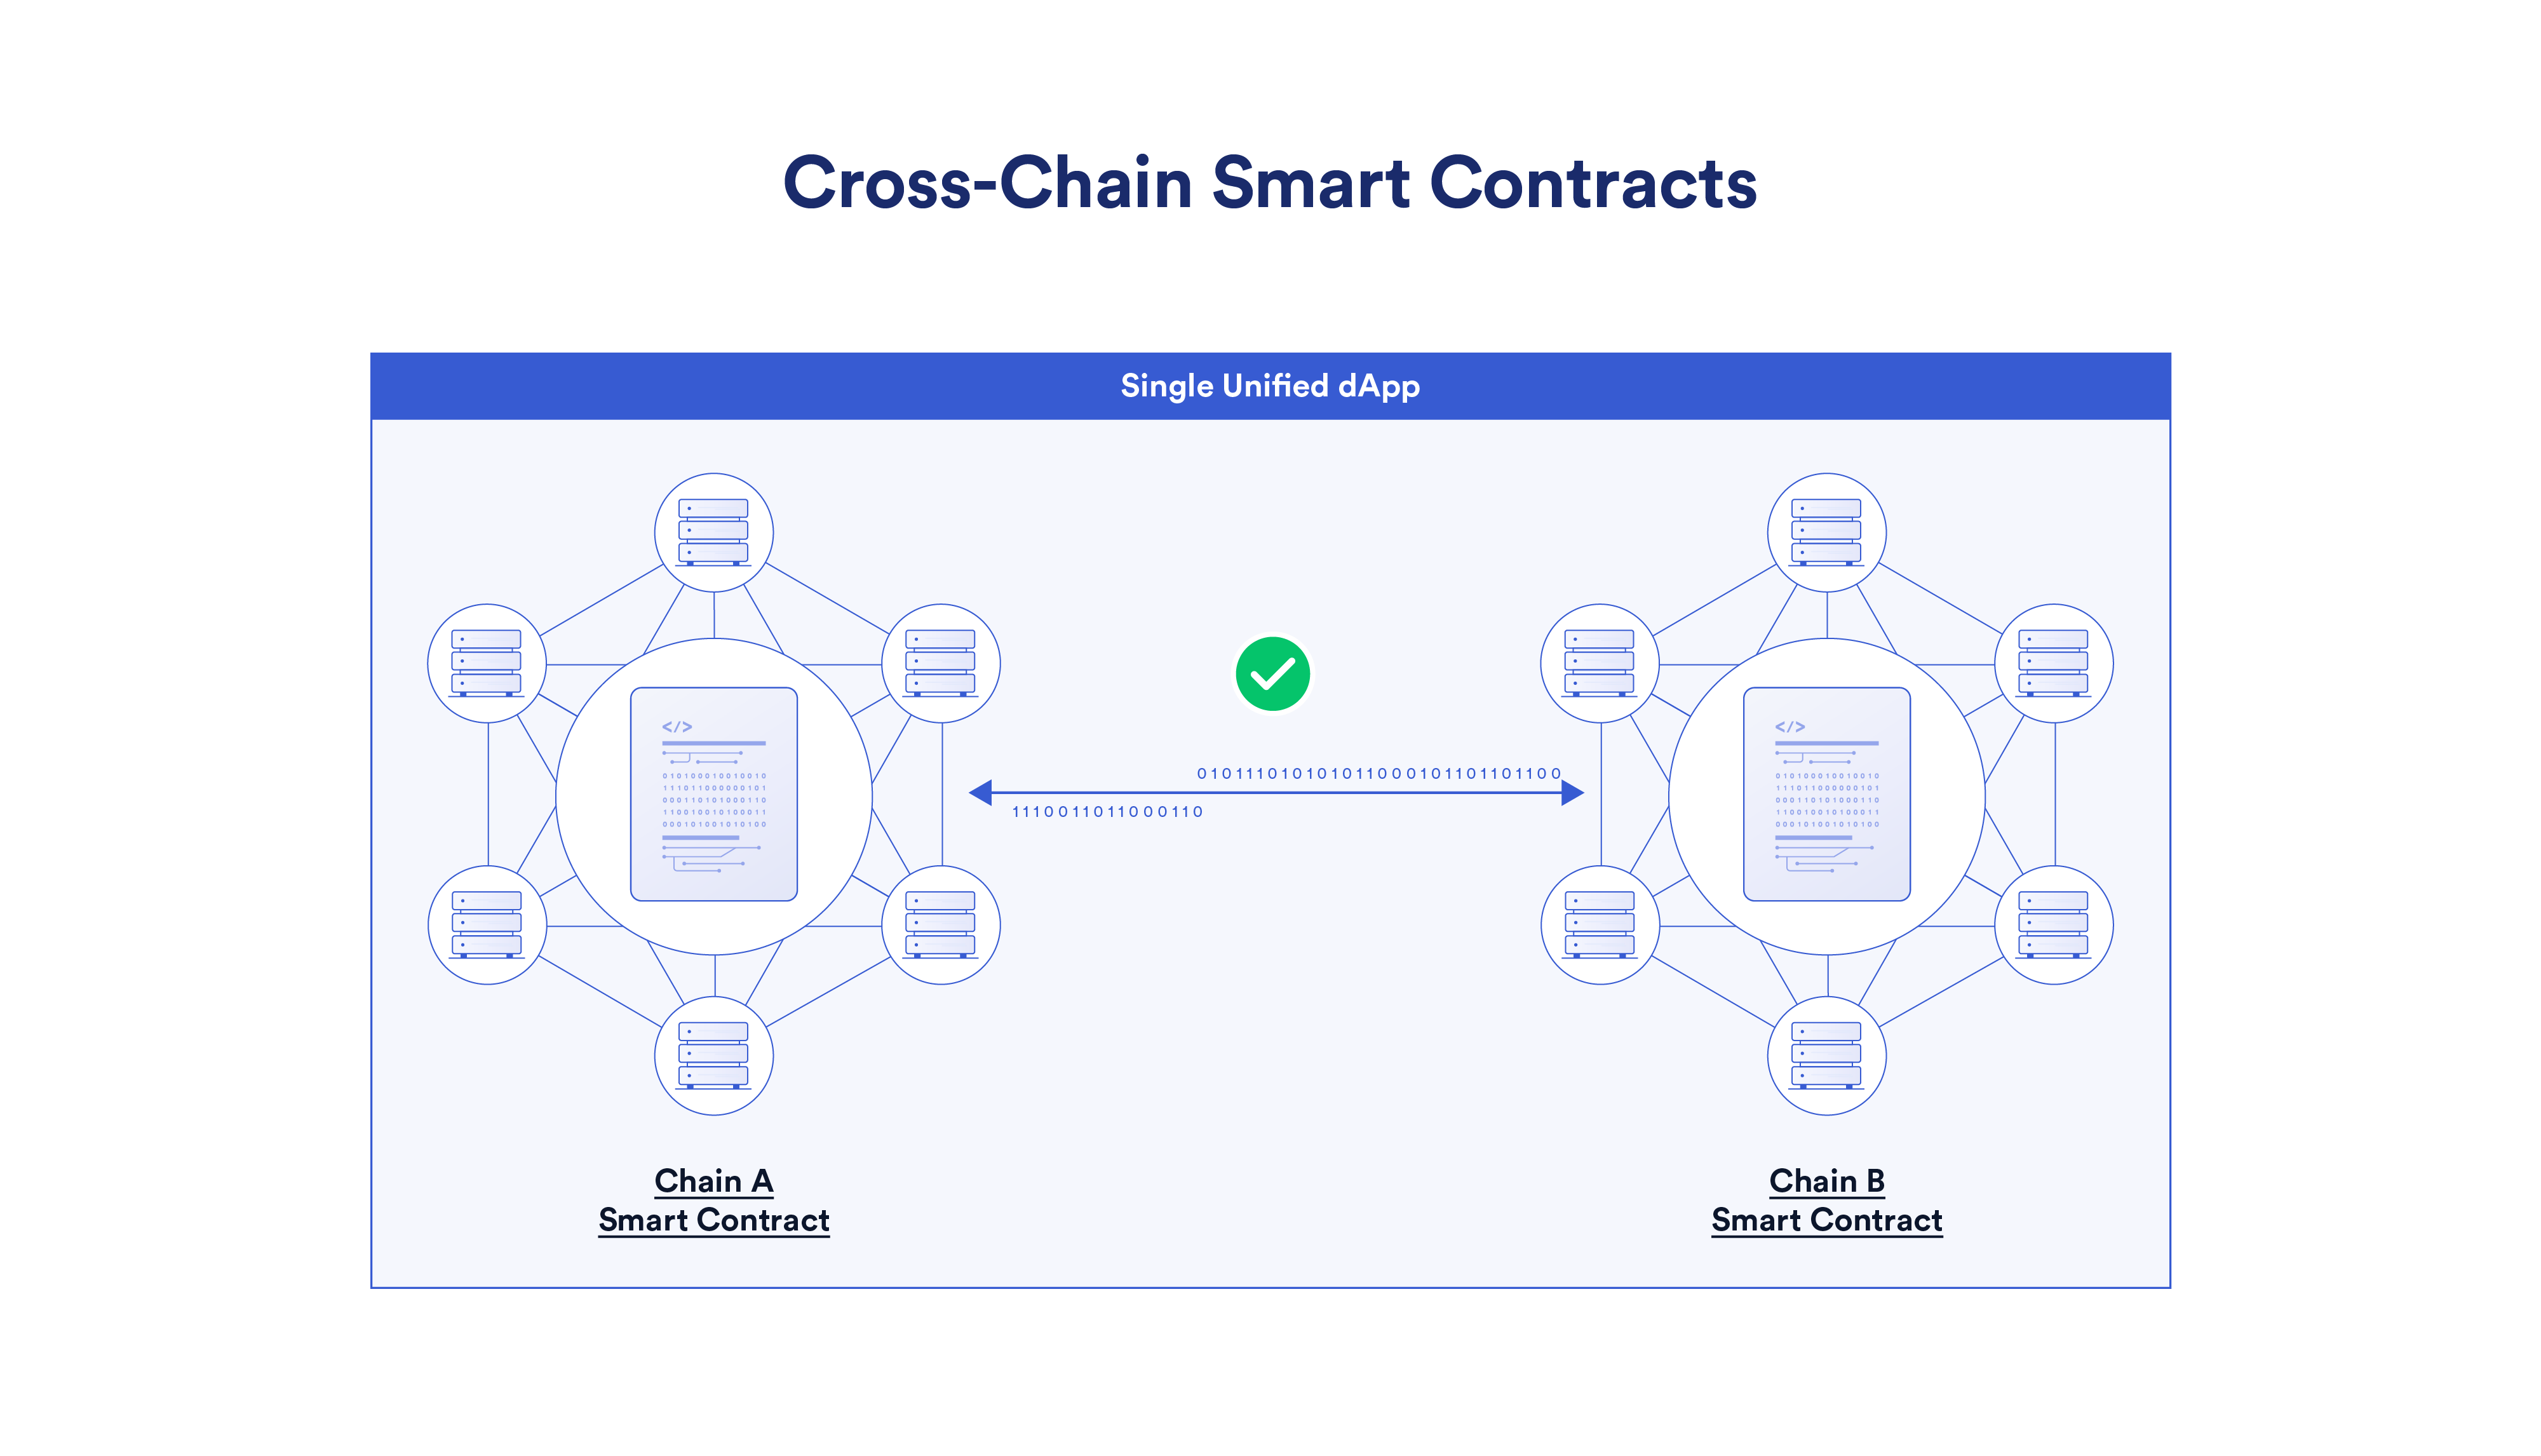 Cross-chain smart contract